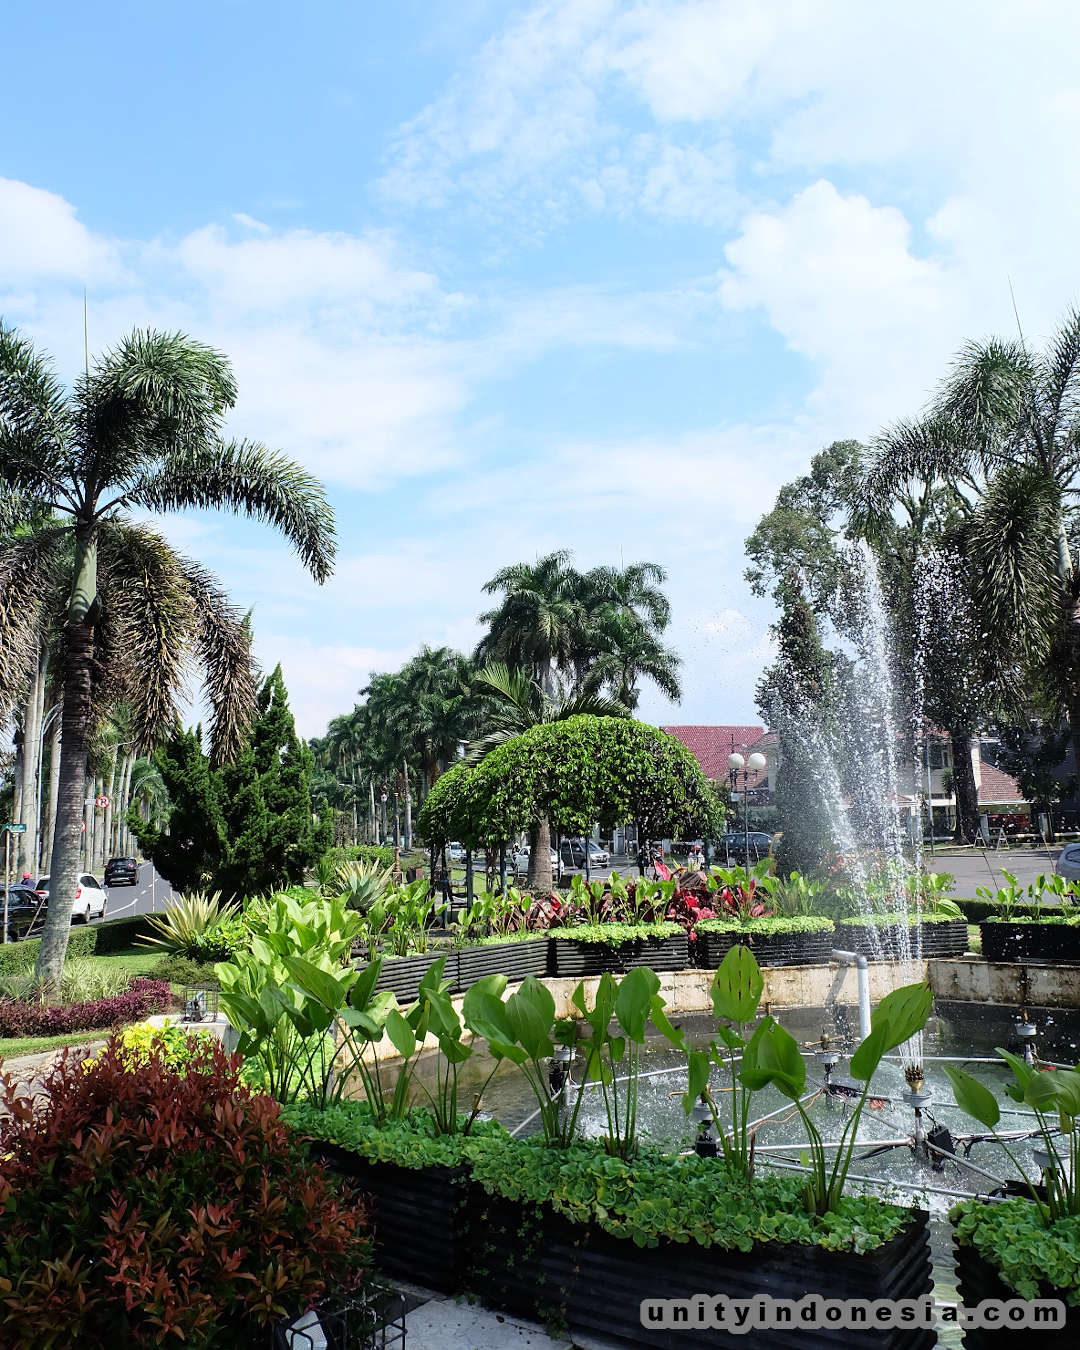 Fountain in Boulevard Ijen, Malang, Indonesia.